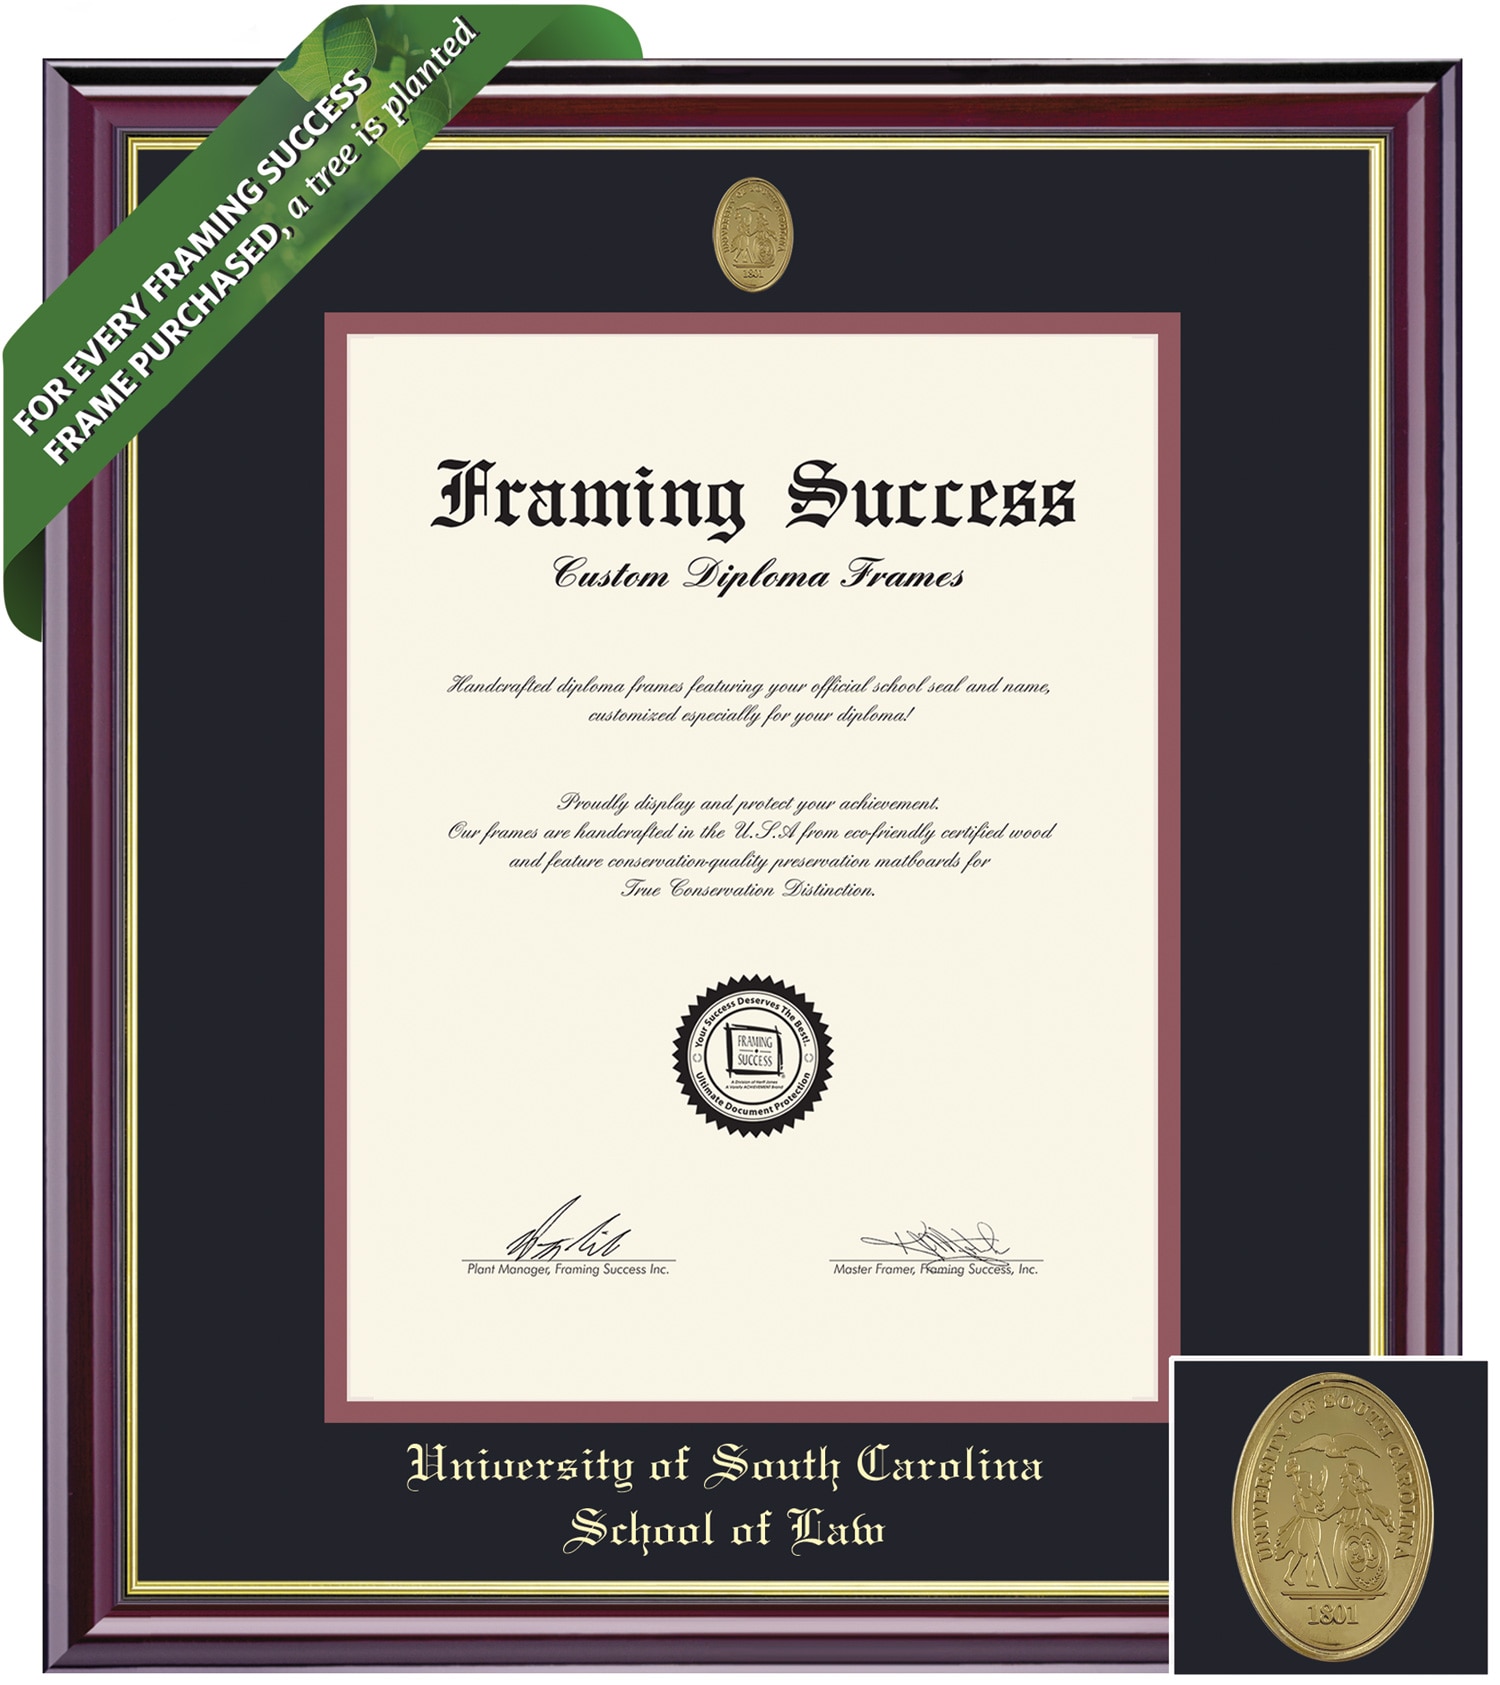 Framing Success 14 x 11 Windsor Gold Medallion Law Diploma Frame